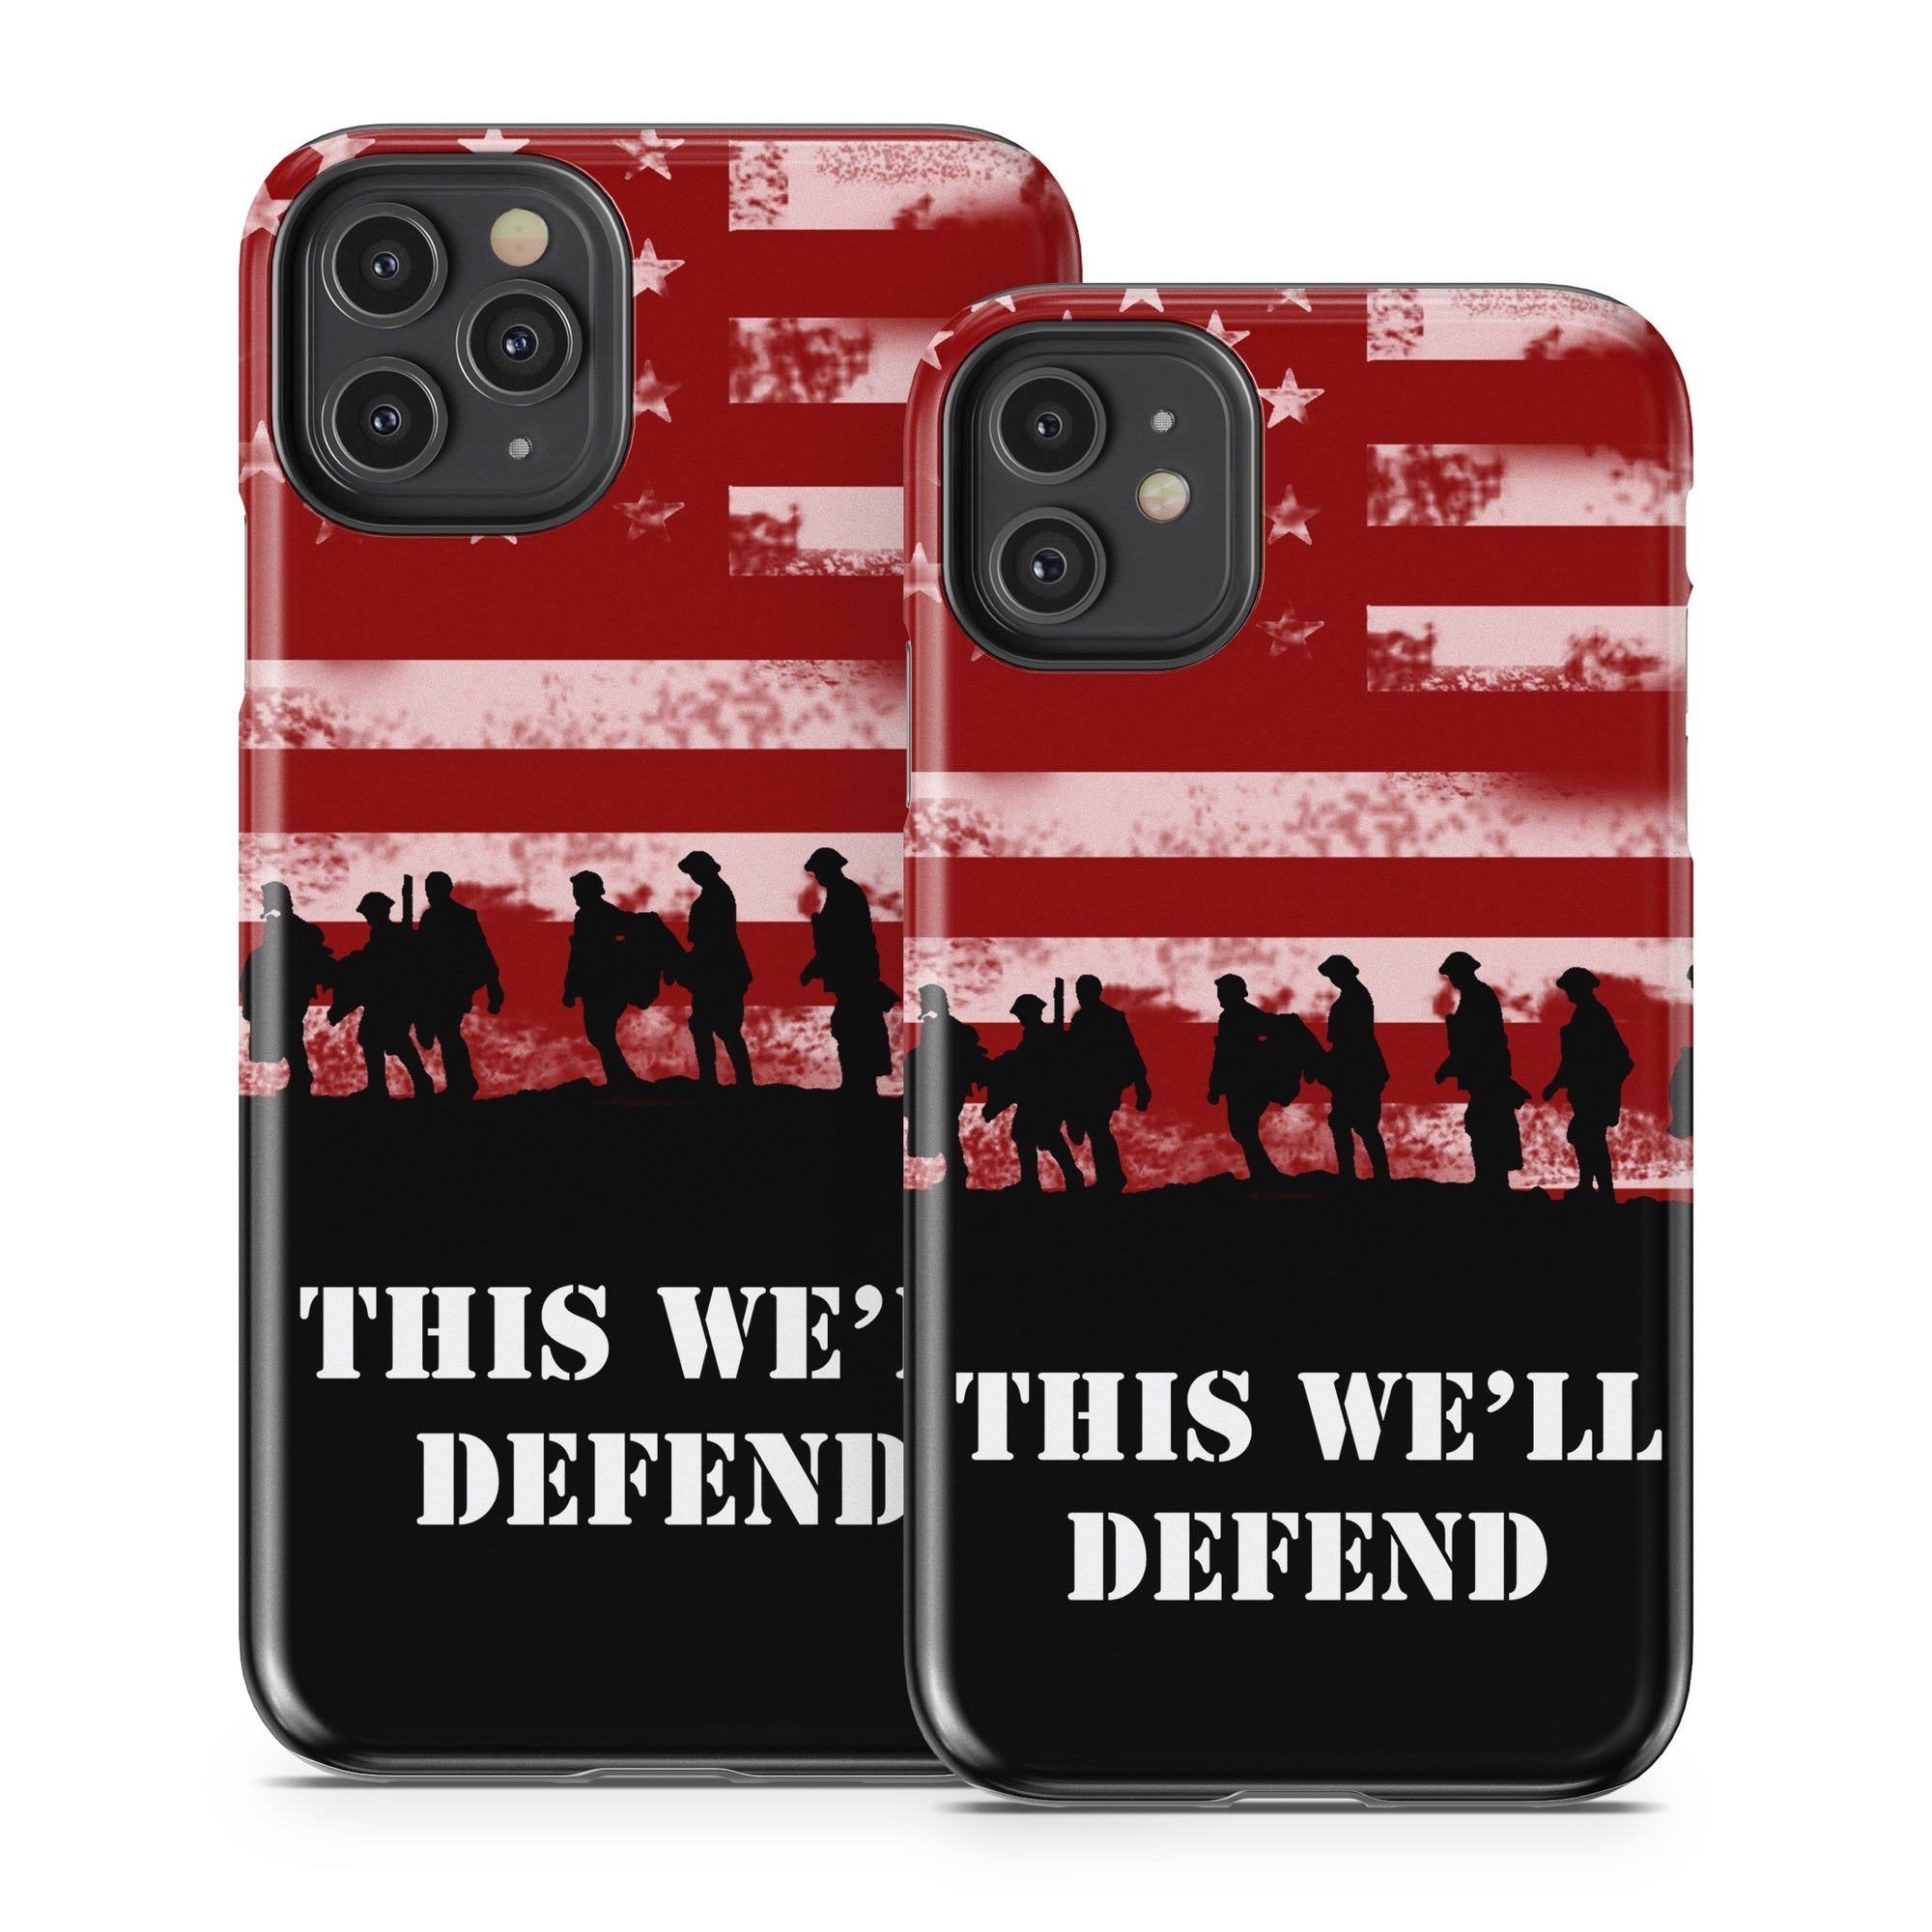 Defend - Apple iPhone 11 Tough Case